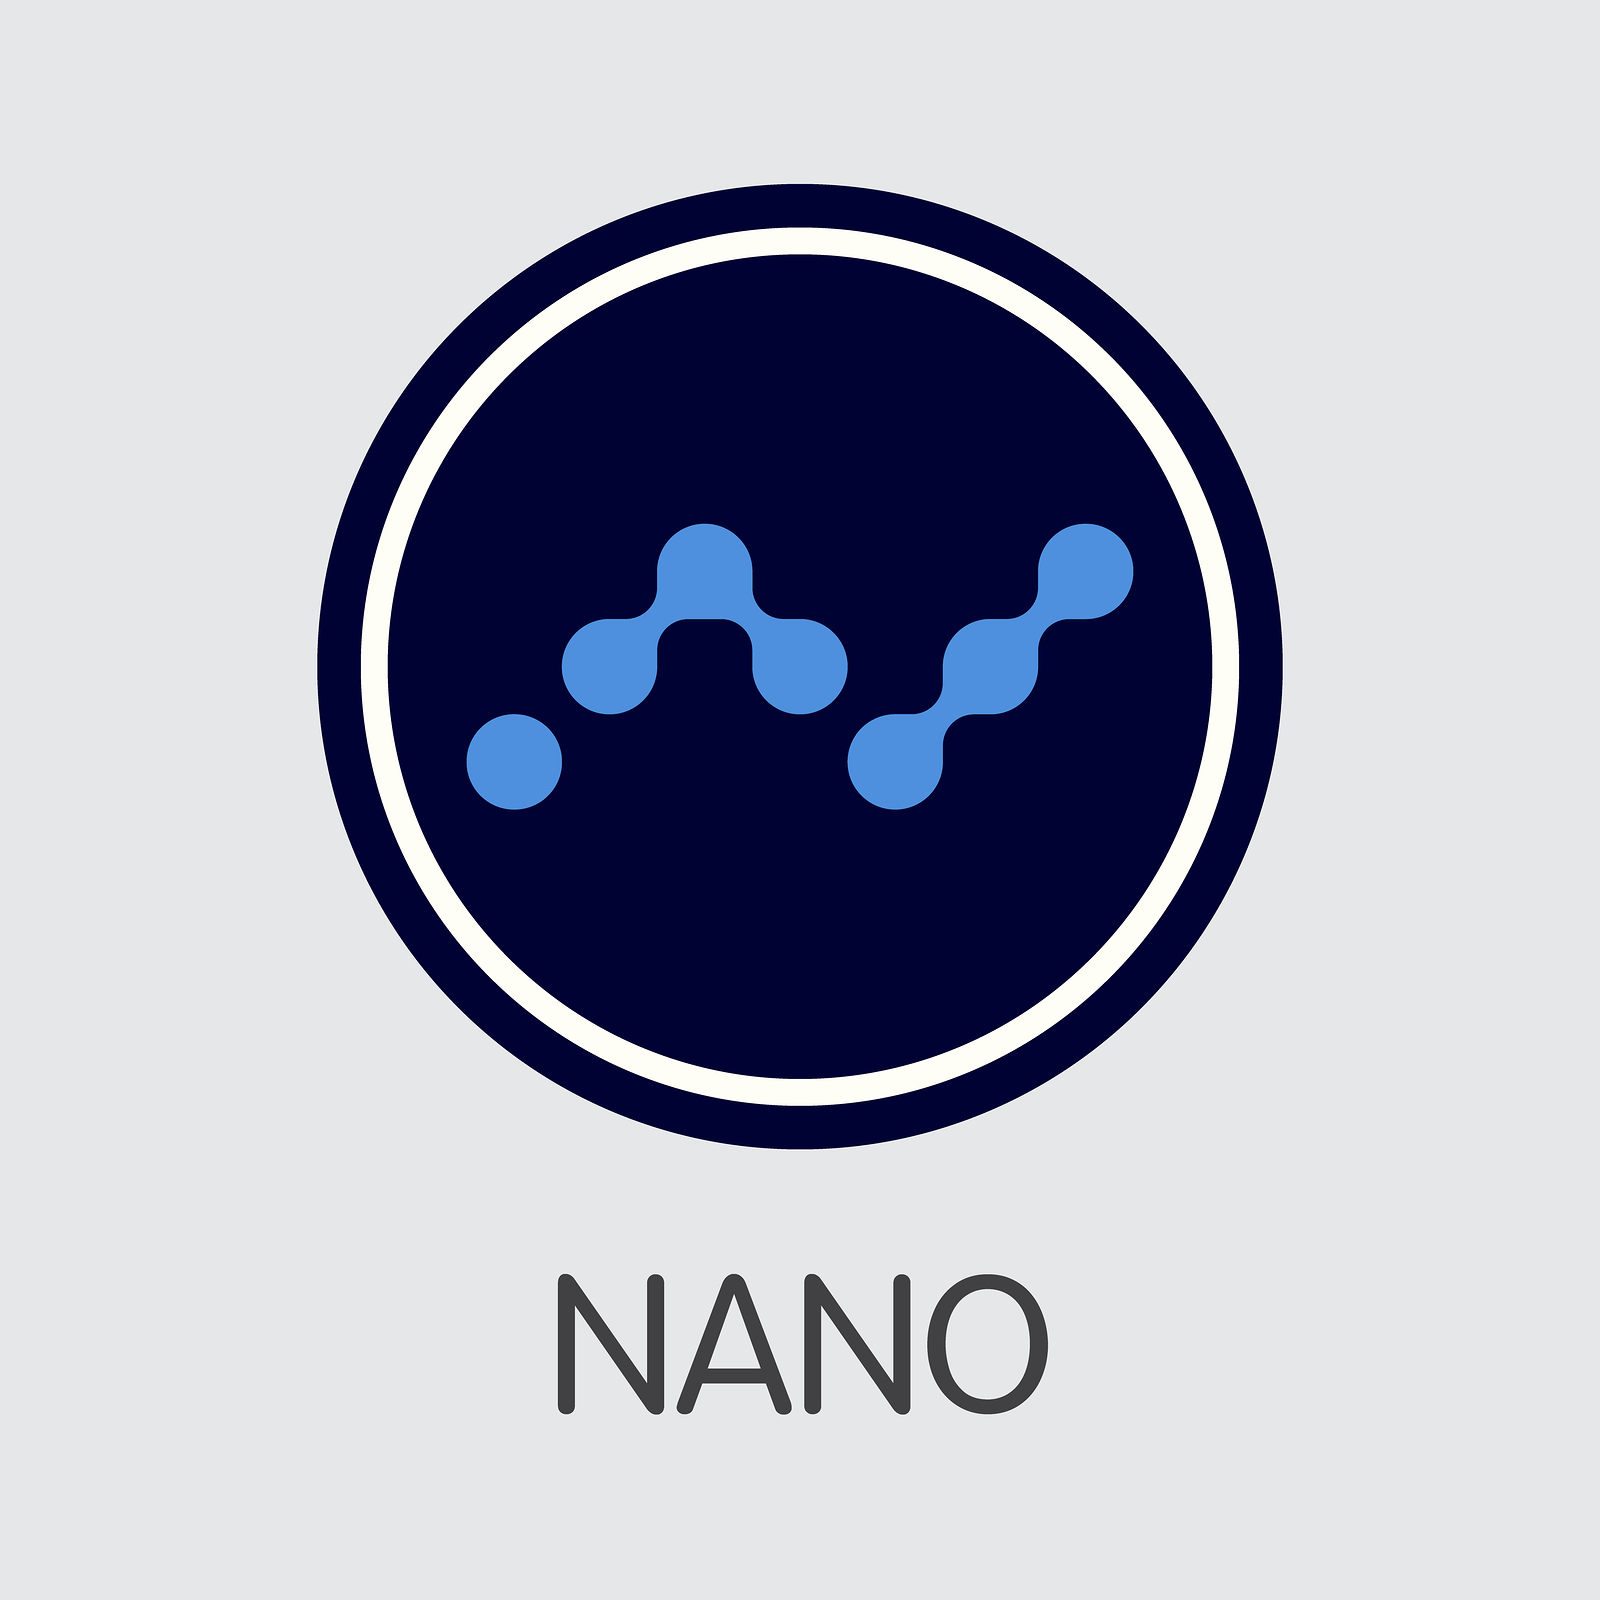 Nano | Eco-friendly & feeless digital currency